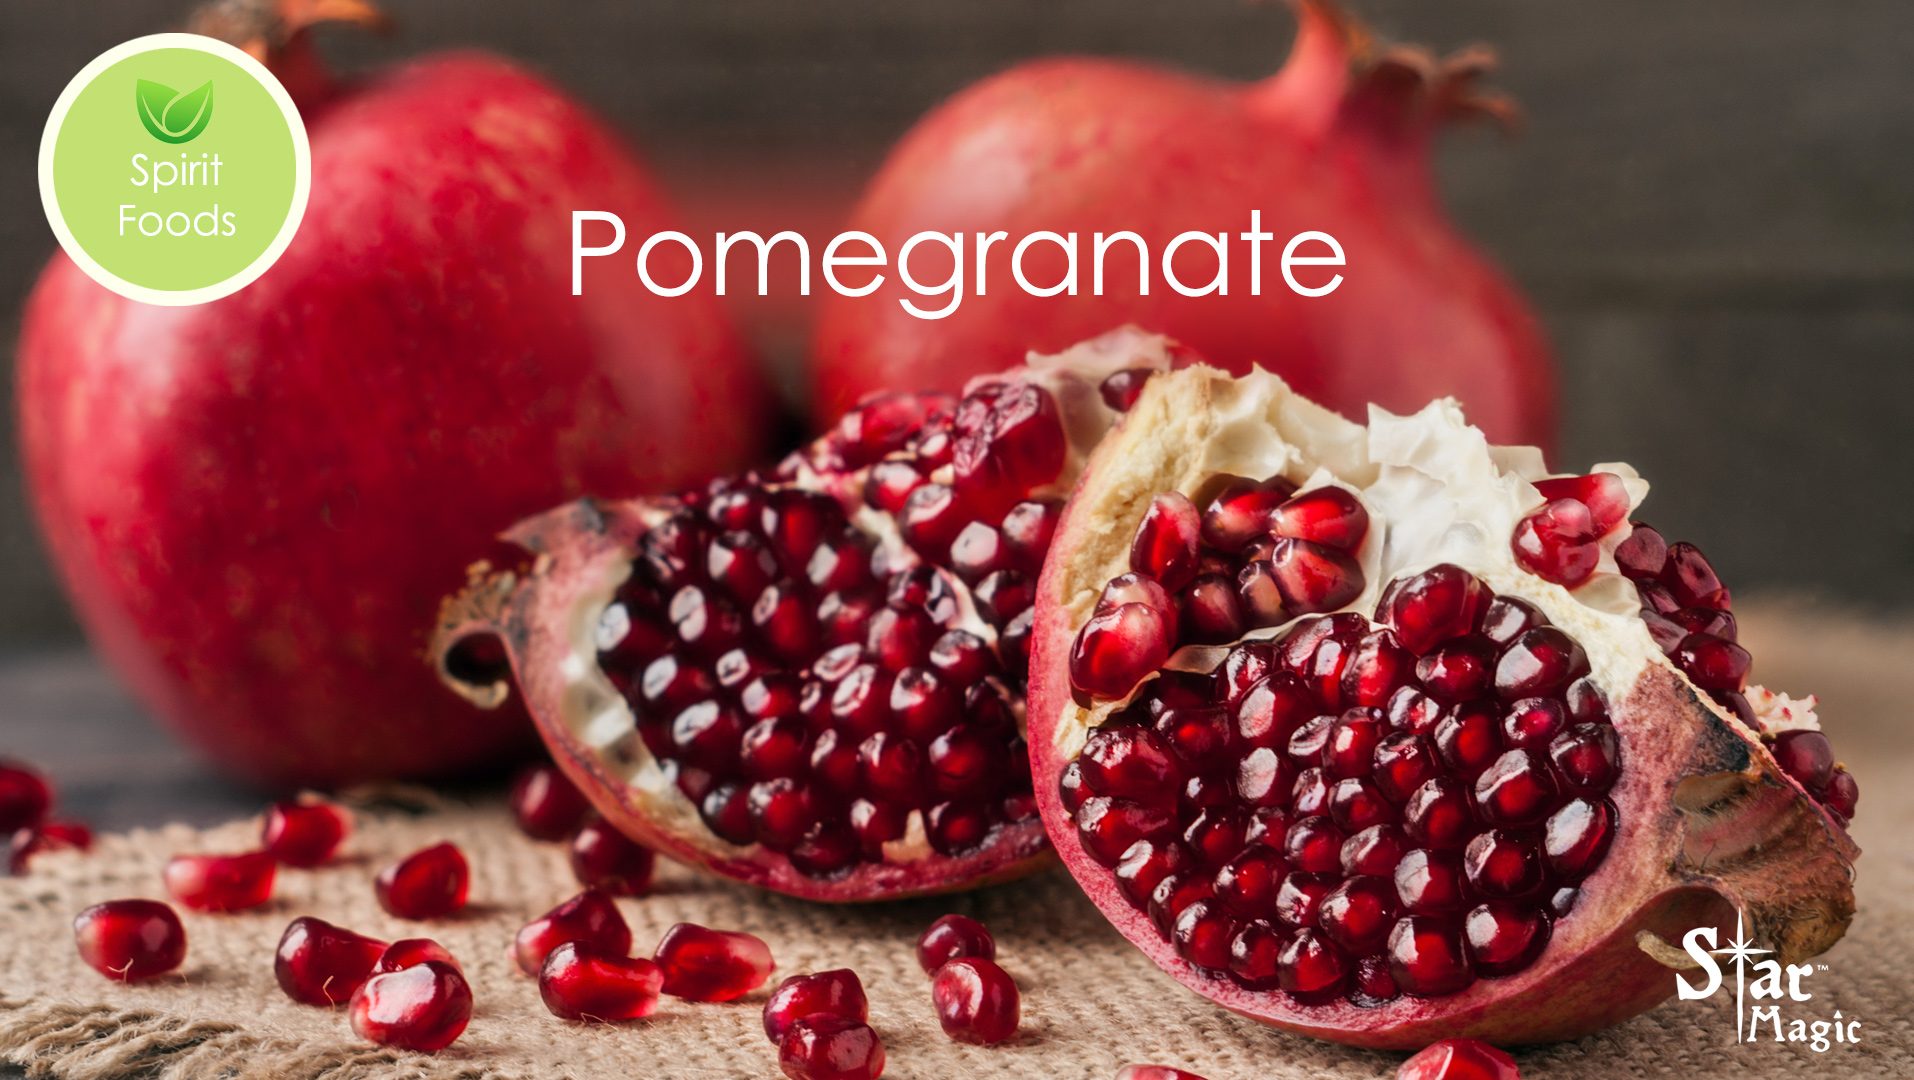 Spirit Food – Pomegranate